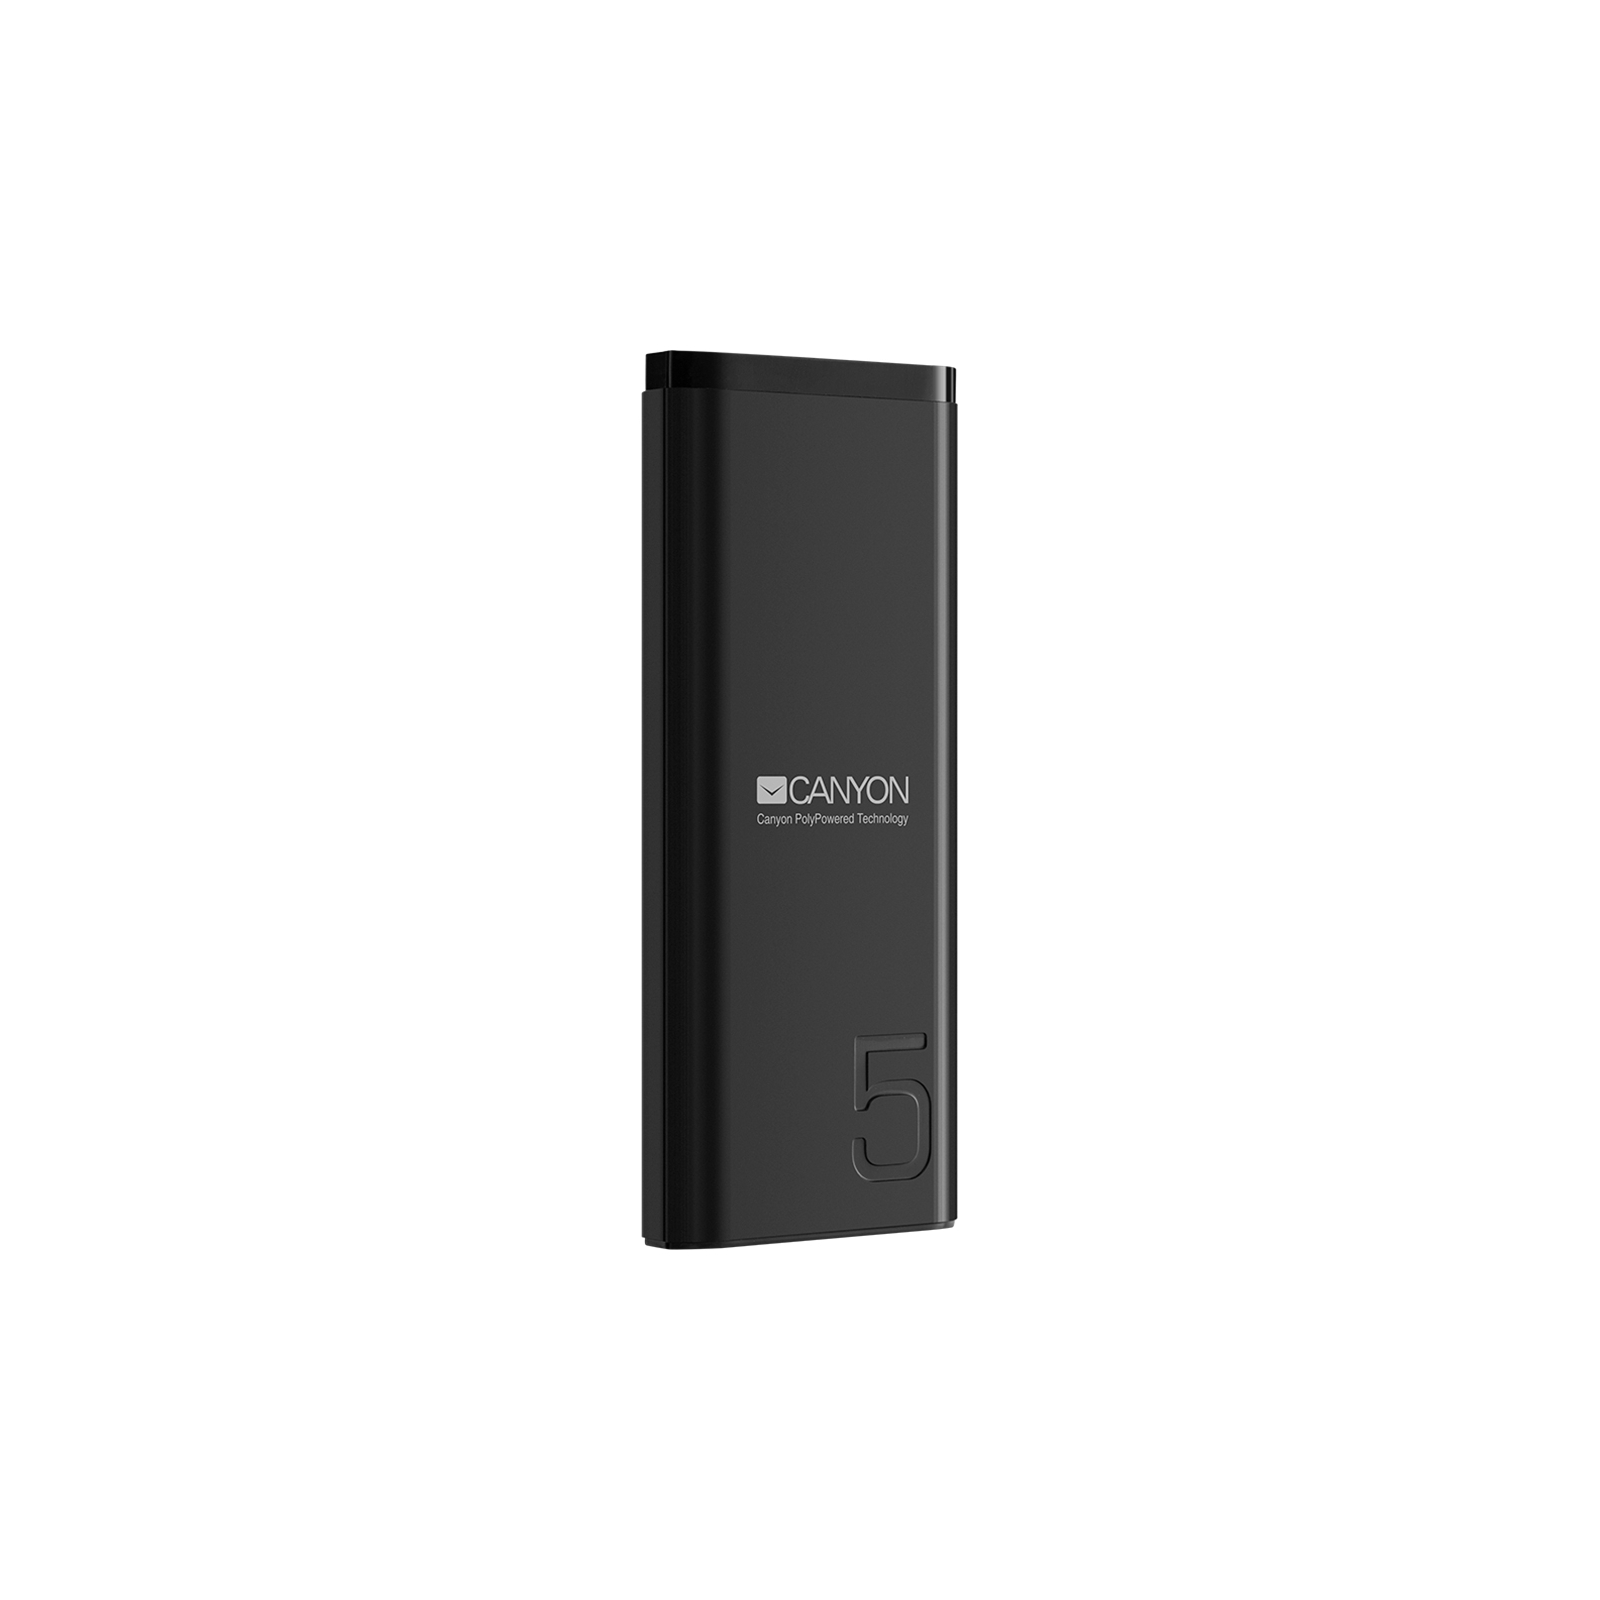 Батарея универсальная Canyon 5000mAh, Input 5V/2A, Output 5V/2.1A, Black (CNE-CPB05B)